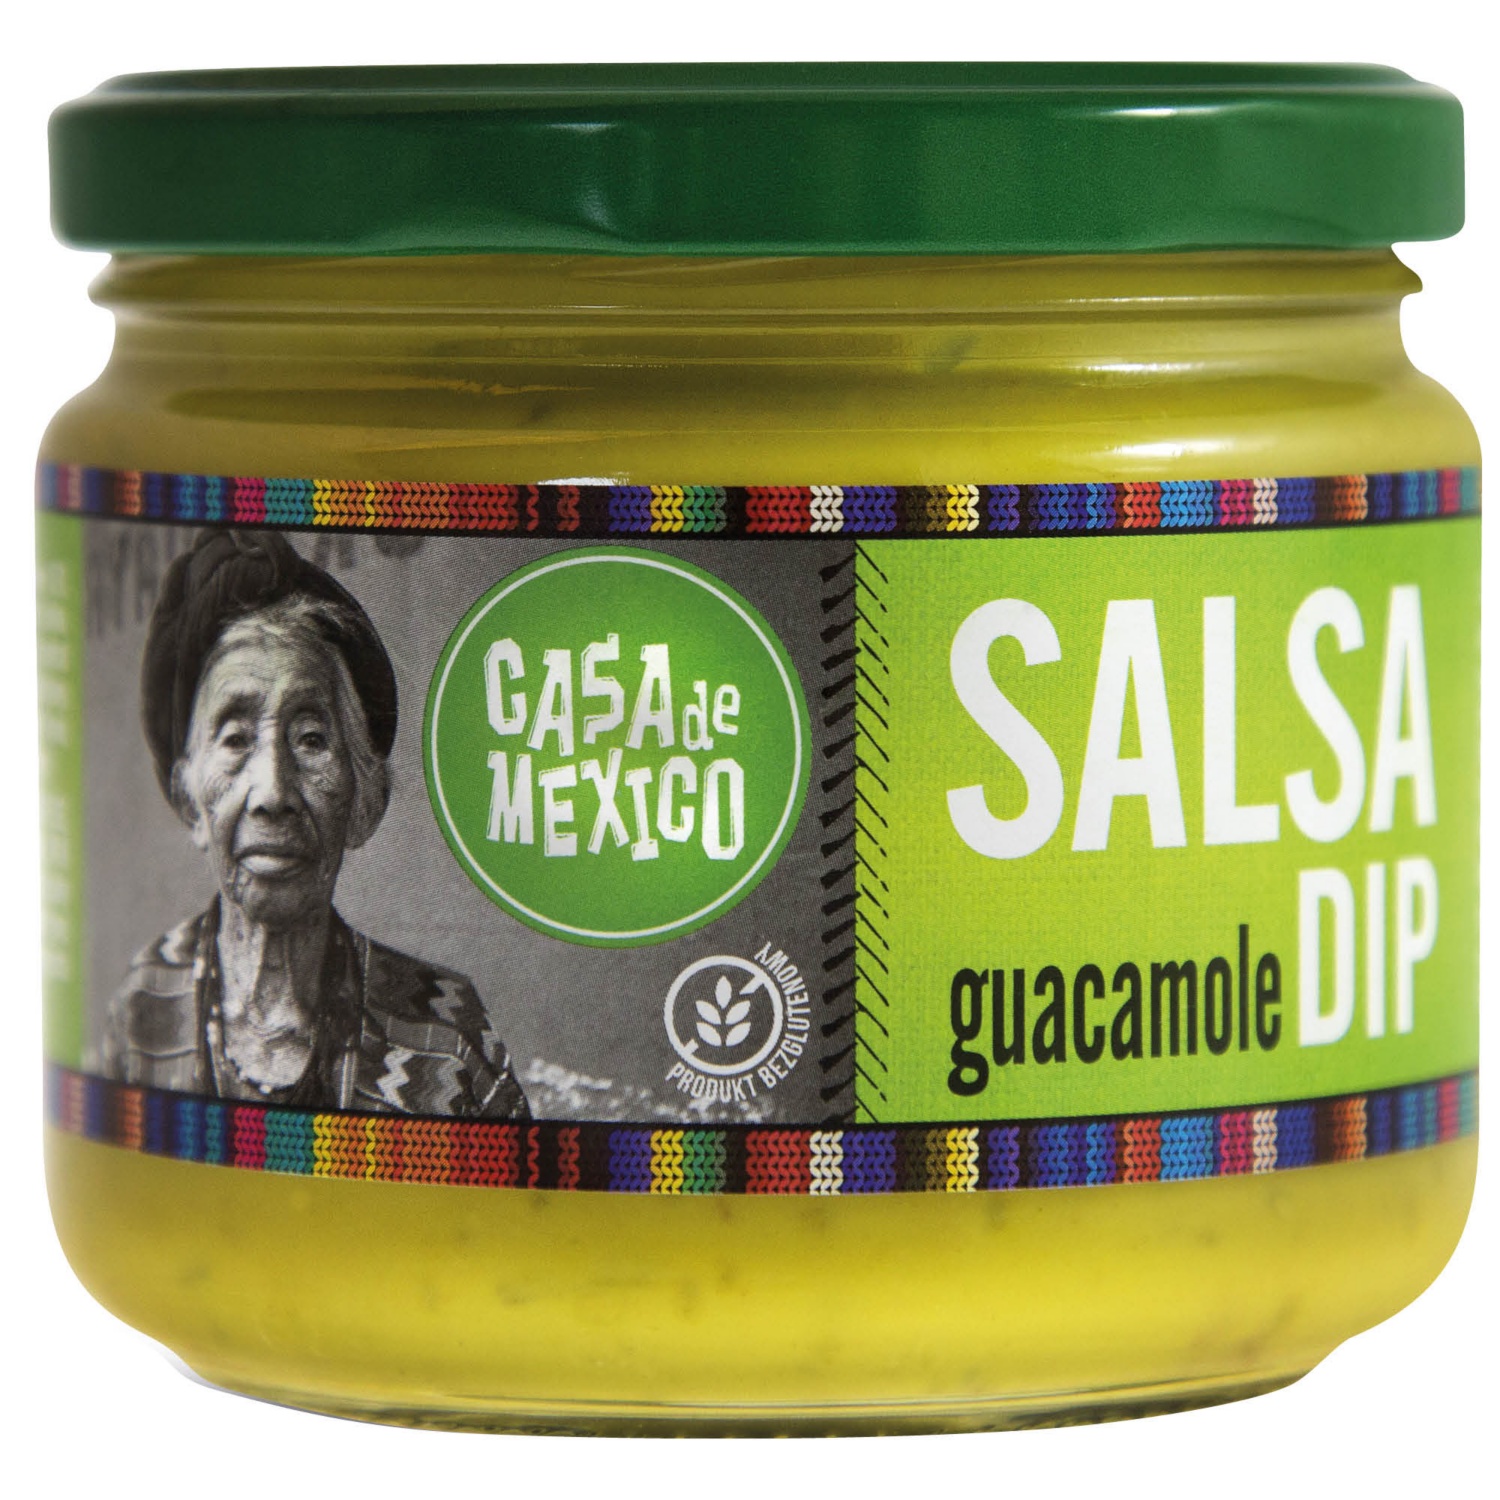 Salsa Dip Mix, Guacamole